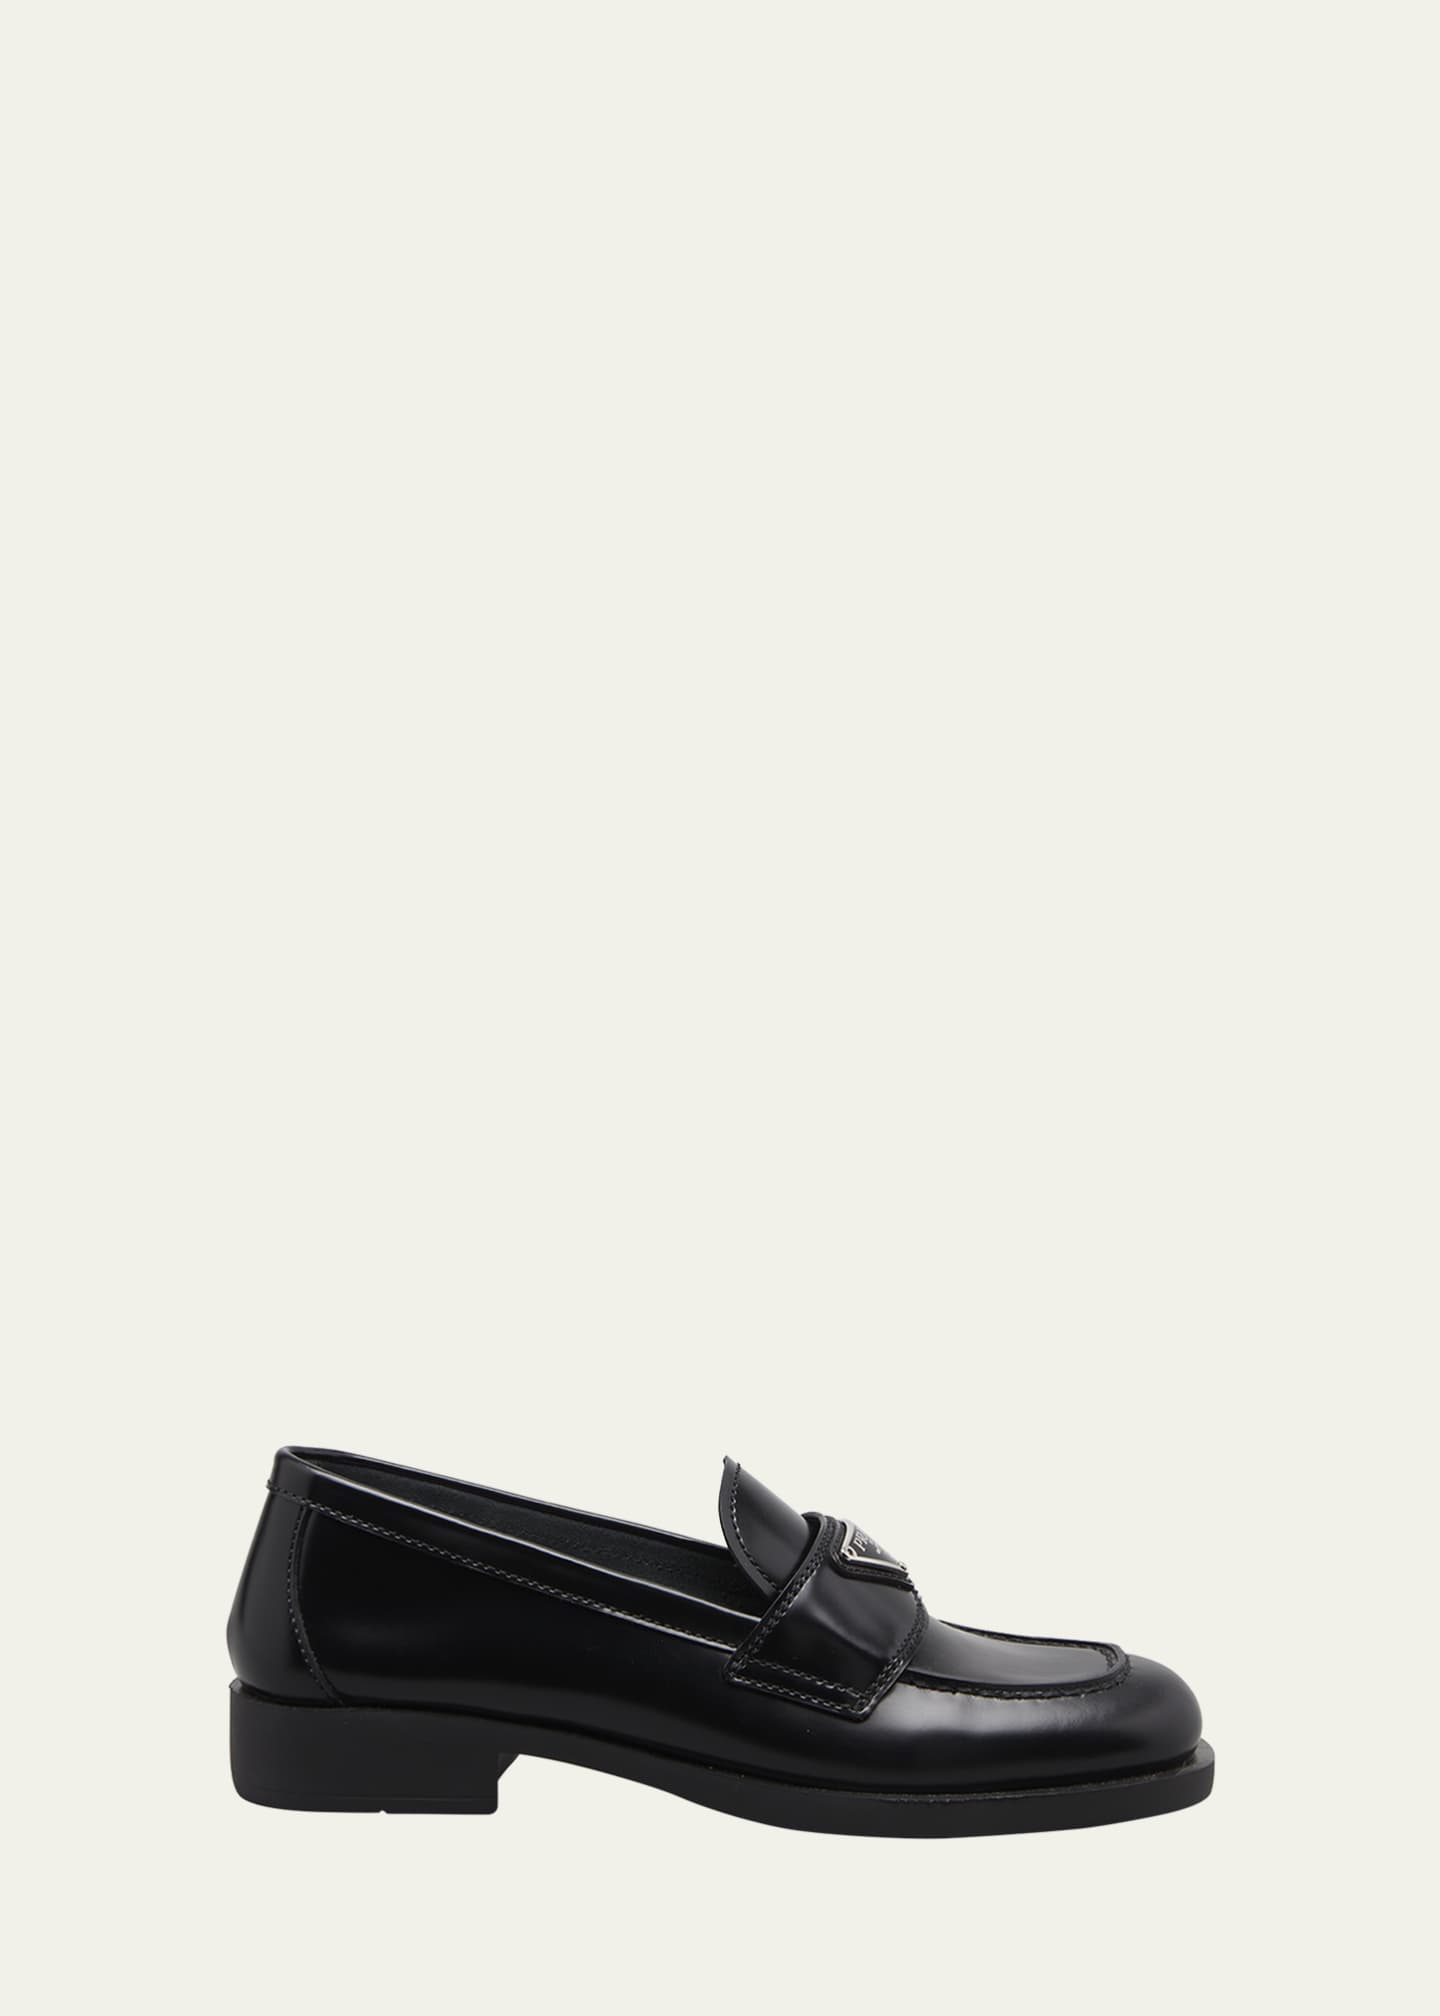 Prada Women's Patent Leather Logo Loafers - Nero - Size 7.5